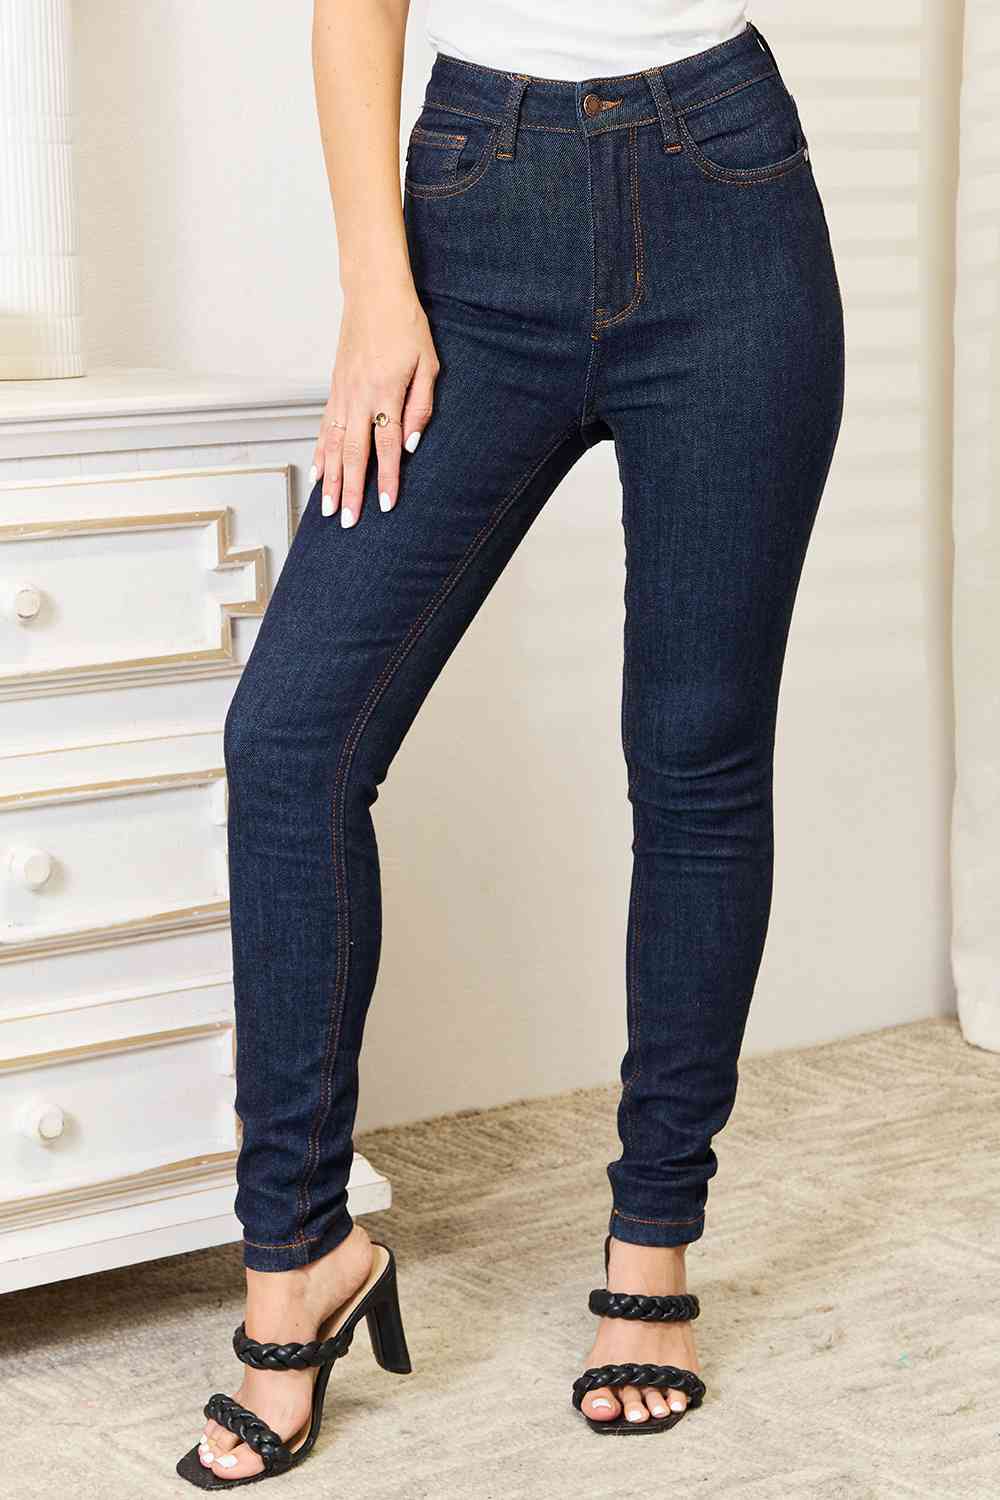 ITEM MUDT SHIP Judy Blue Full Size High Waist Pocket Embroidered Skinny Jeans